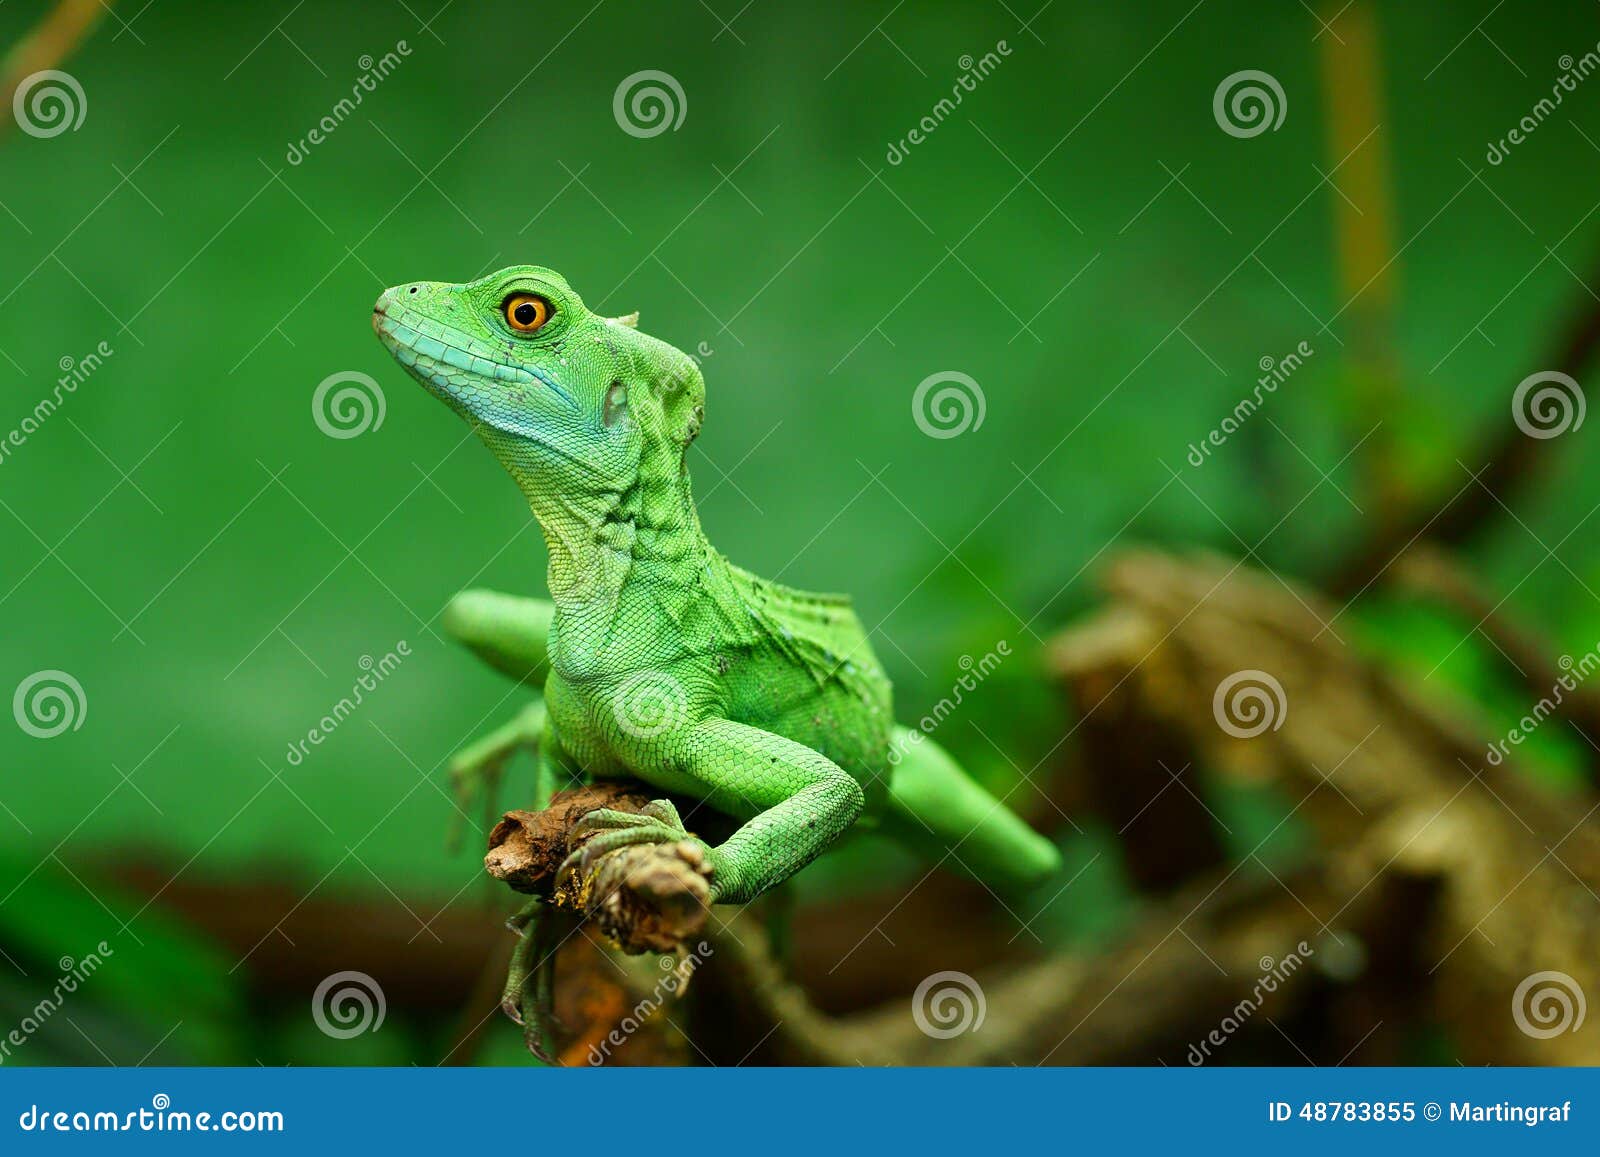 green basilisk lizard close-up by blurred background